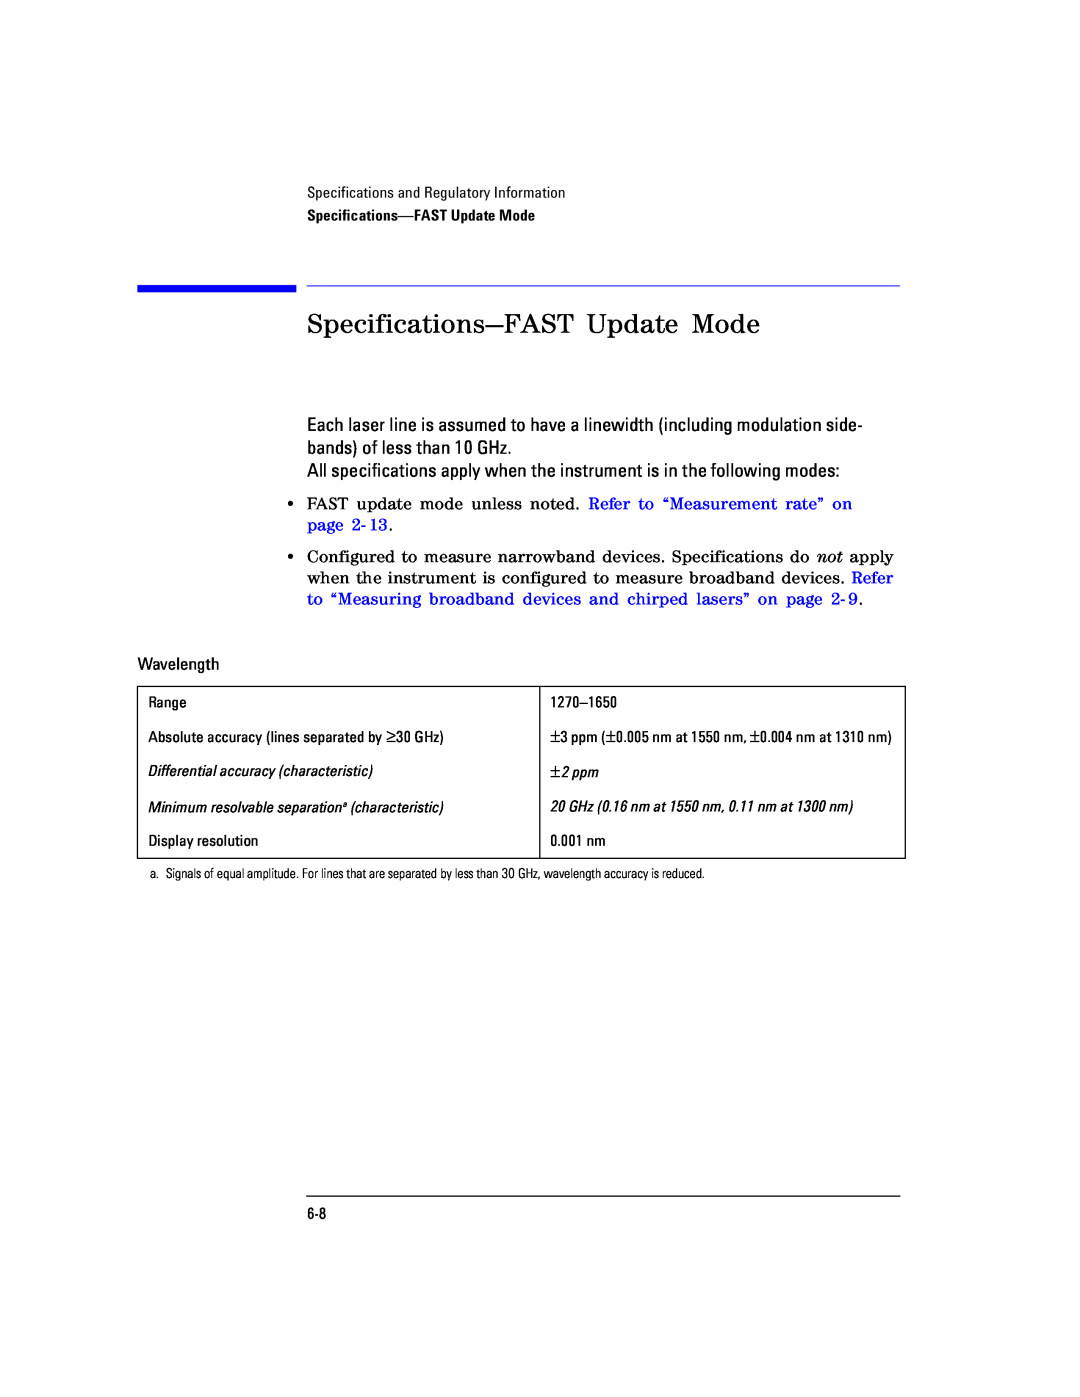 Agilent Technologies Agilent 86120C manual Specifications-FAST Update Mode, Wavelength 